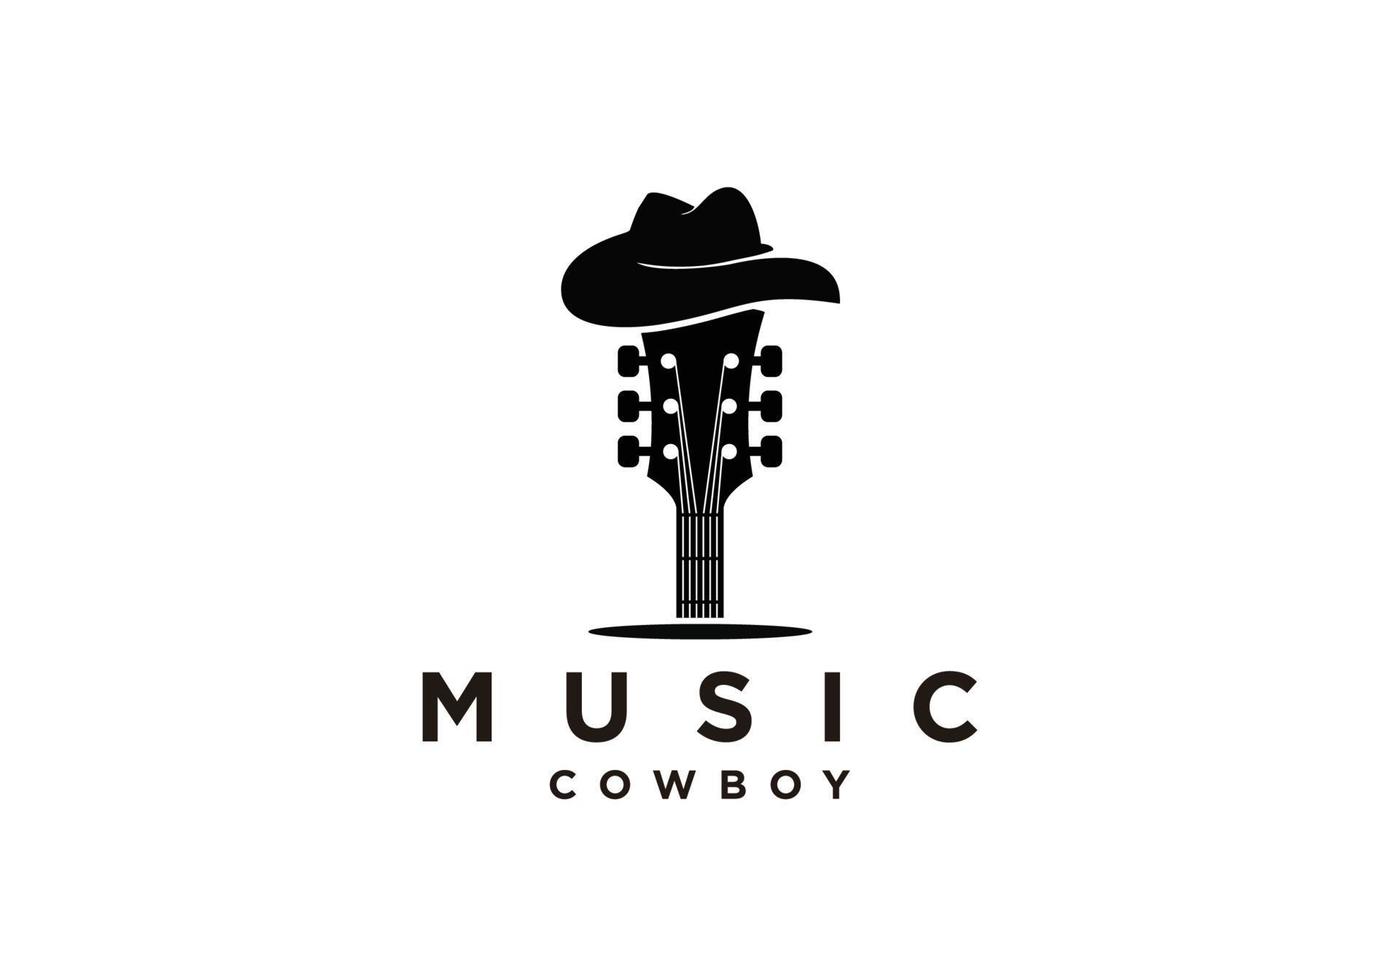 guitar and hat cowboy logo symbol inspiration vector